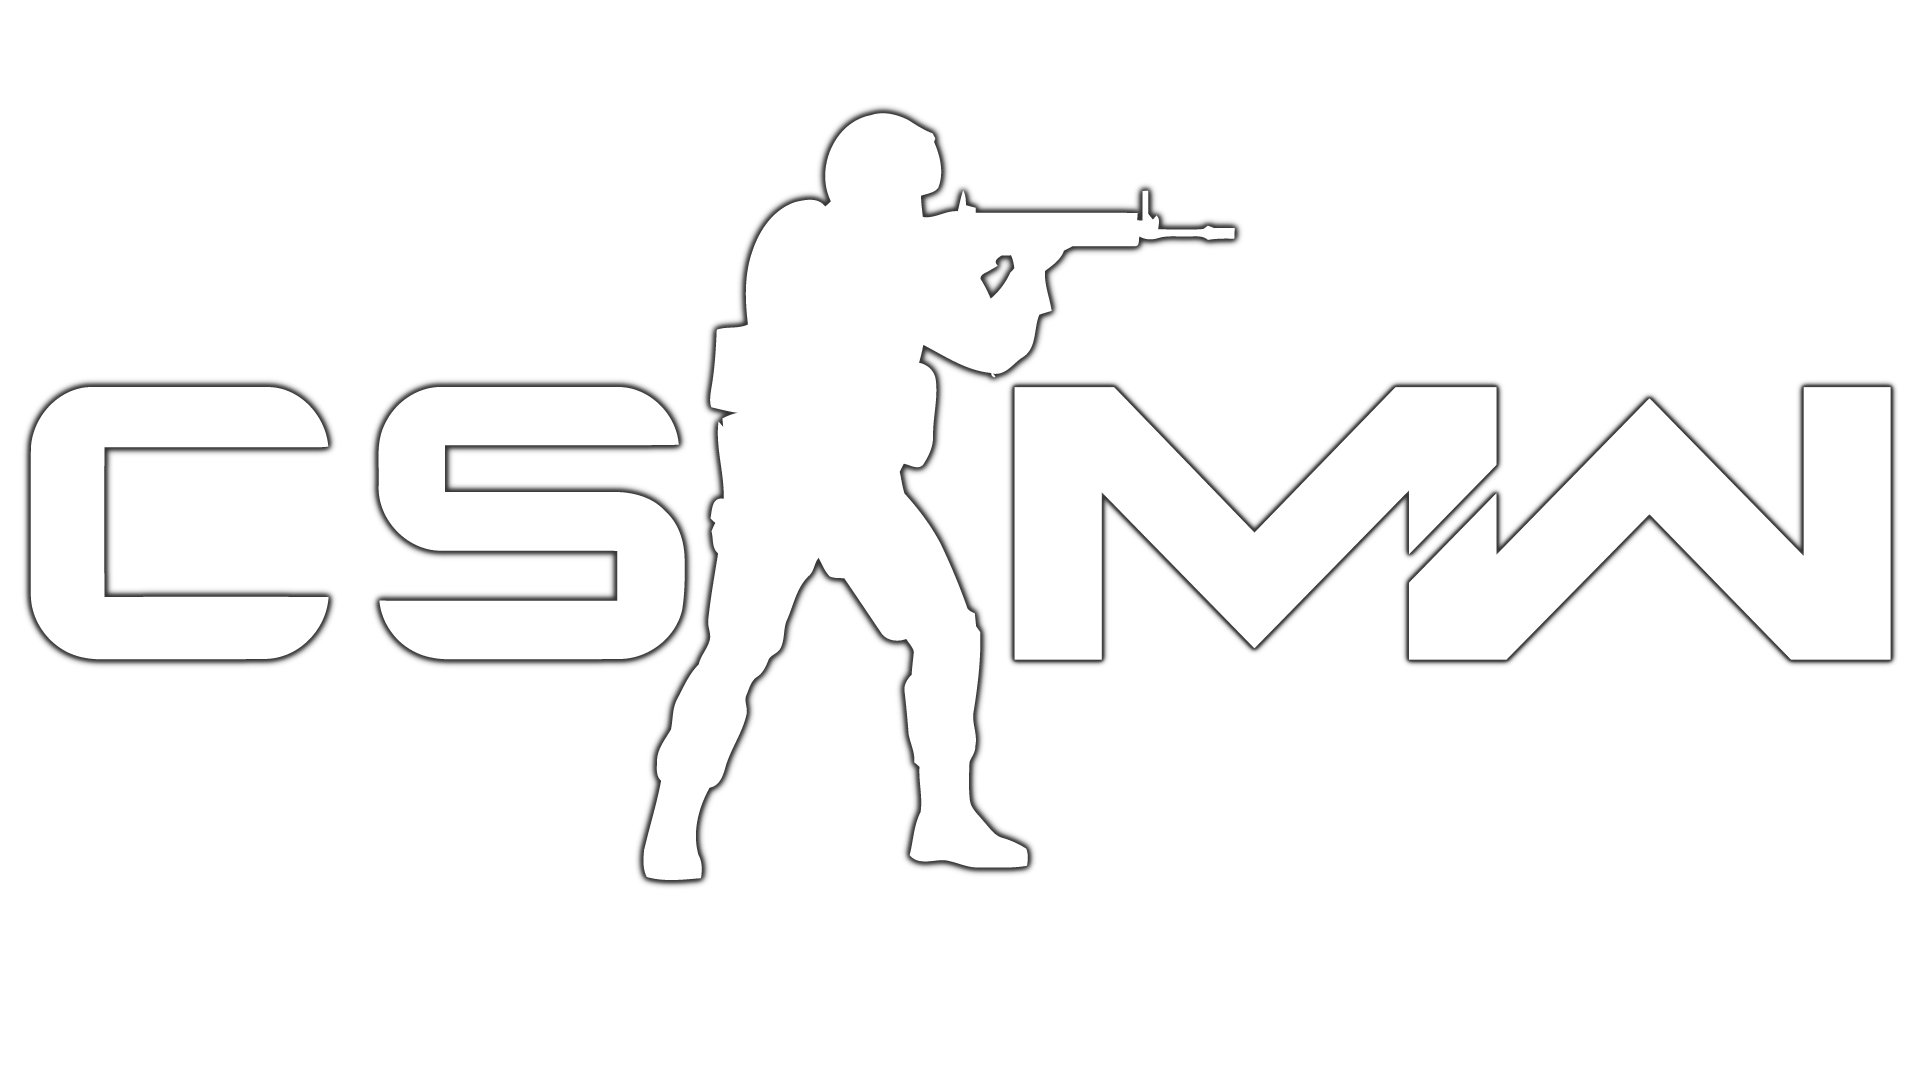 Counter Strike CSGO mod file - ModDB